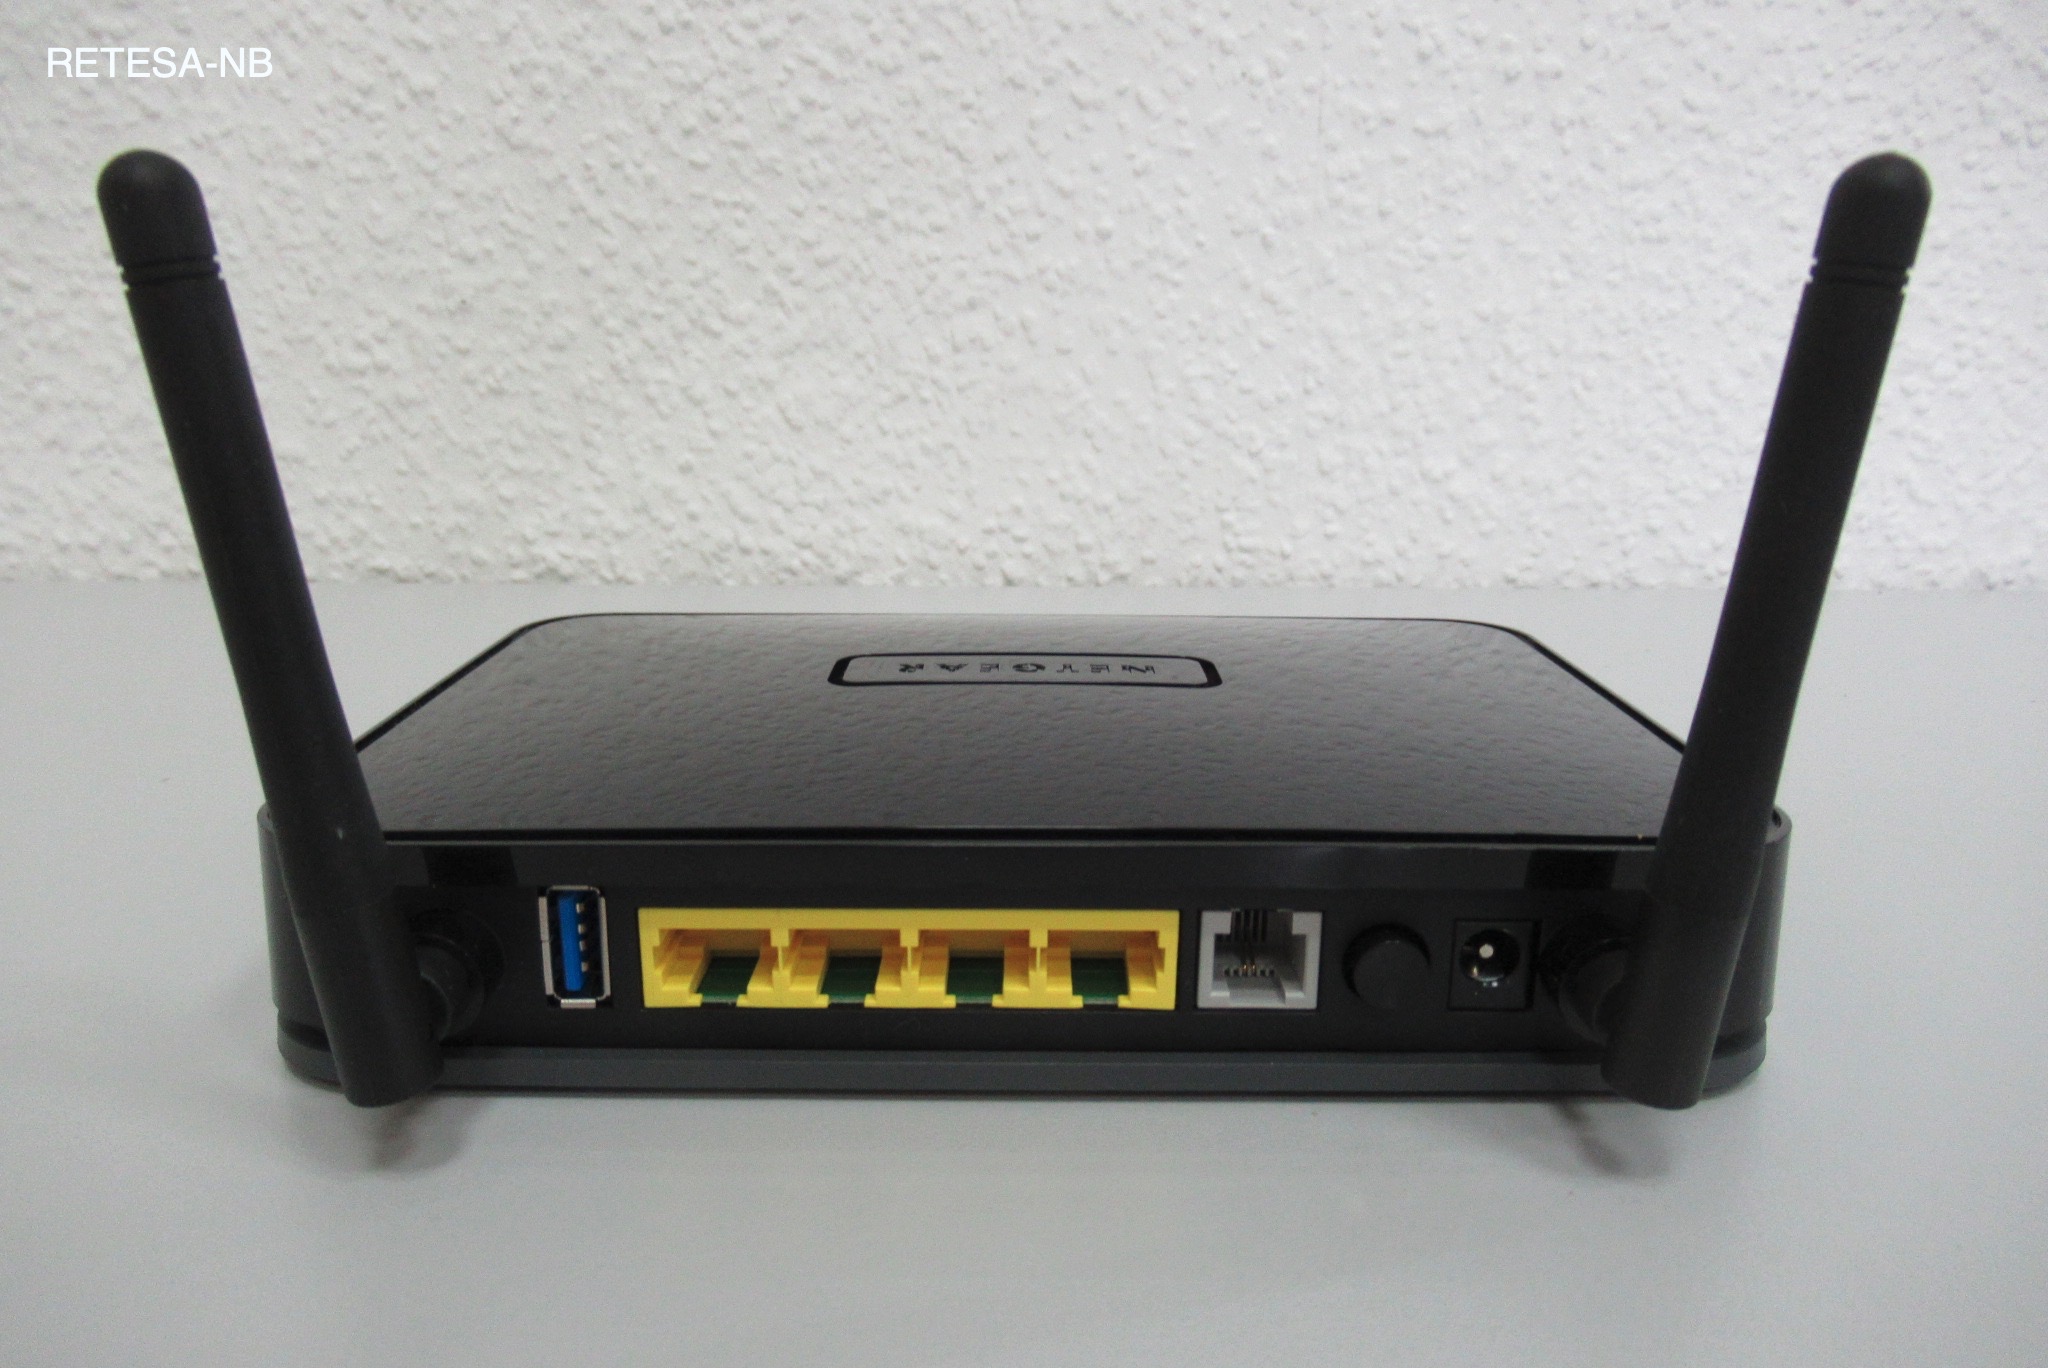 NetGear DSL-MODEM-Router DGN2200MB